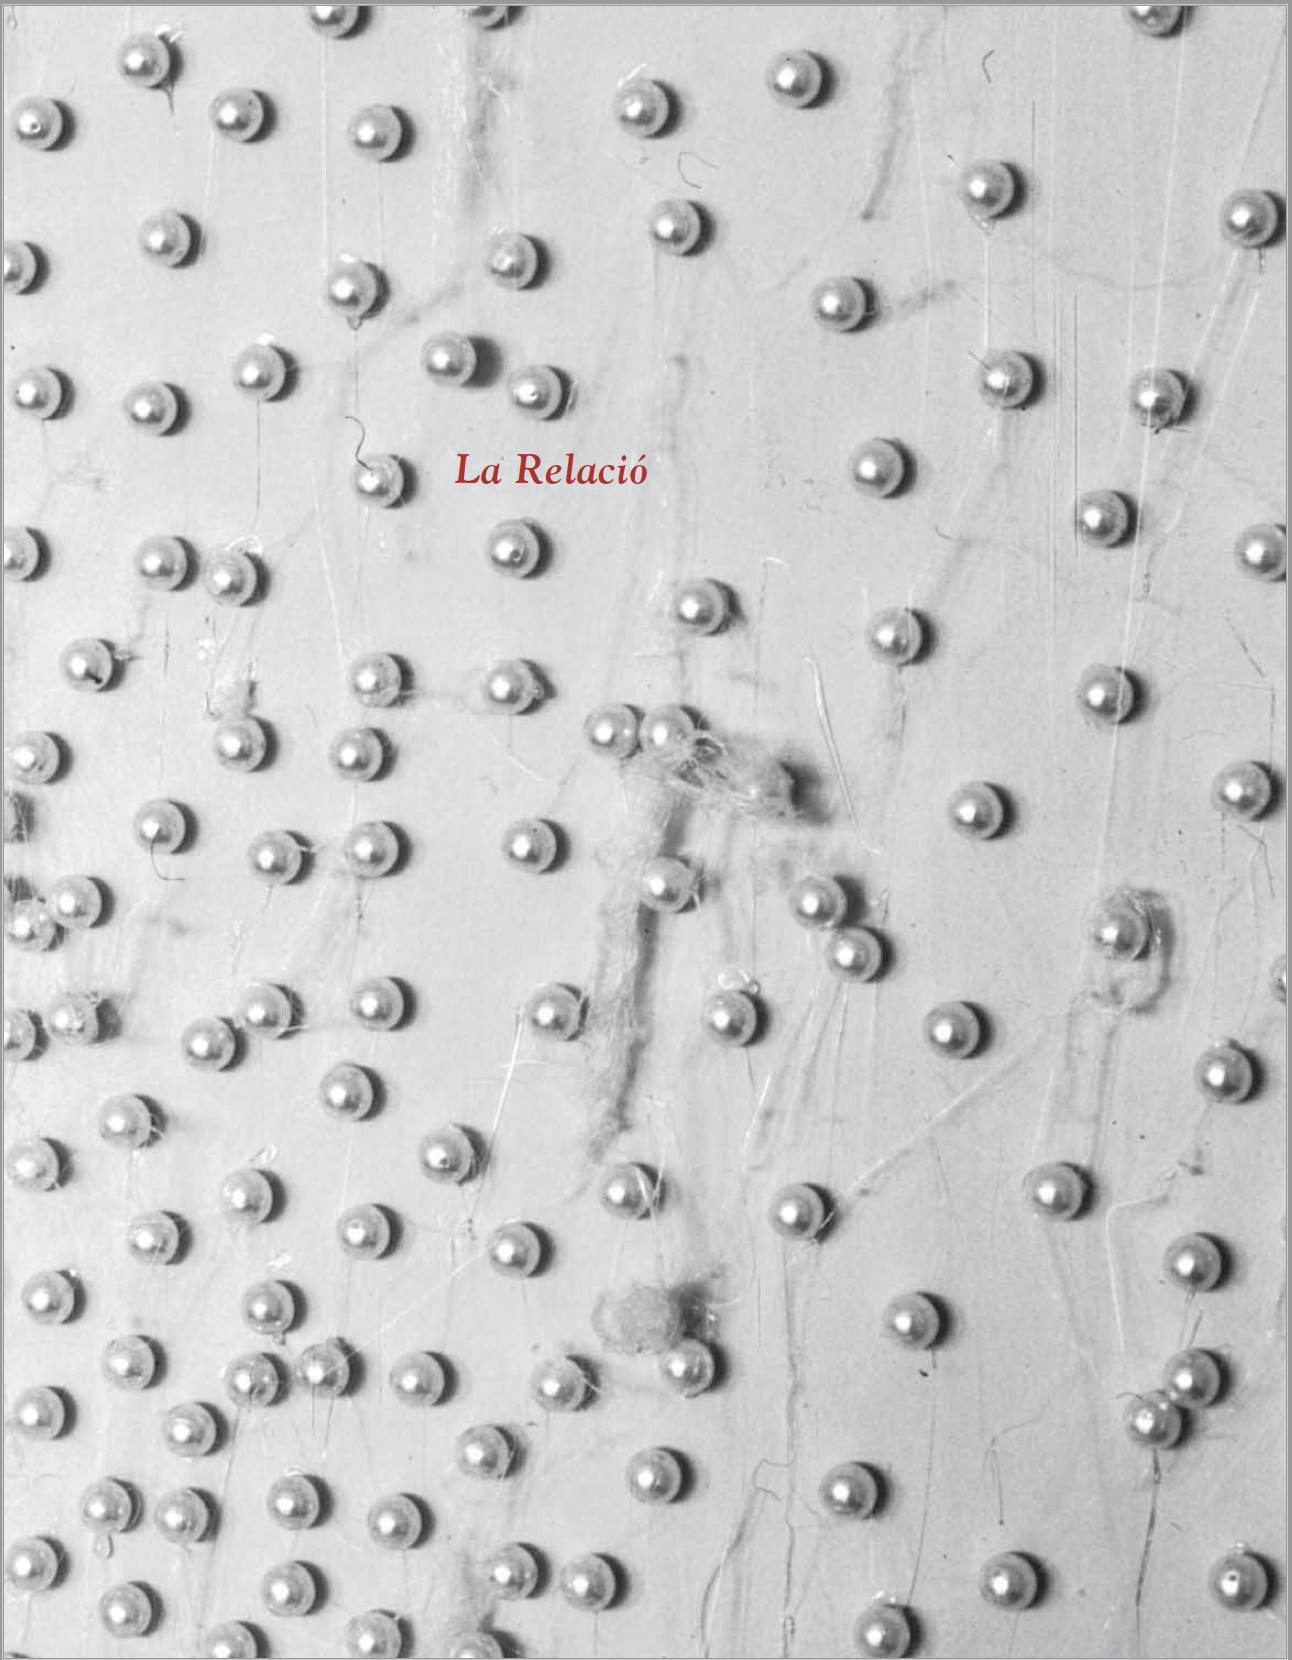  La Relació, exhibition catalog published by DUODA, University of Barcelona (2008.) with essays by Bea Espejo and María Milagros Rivera 